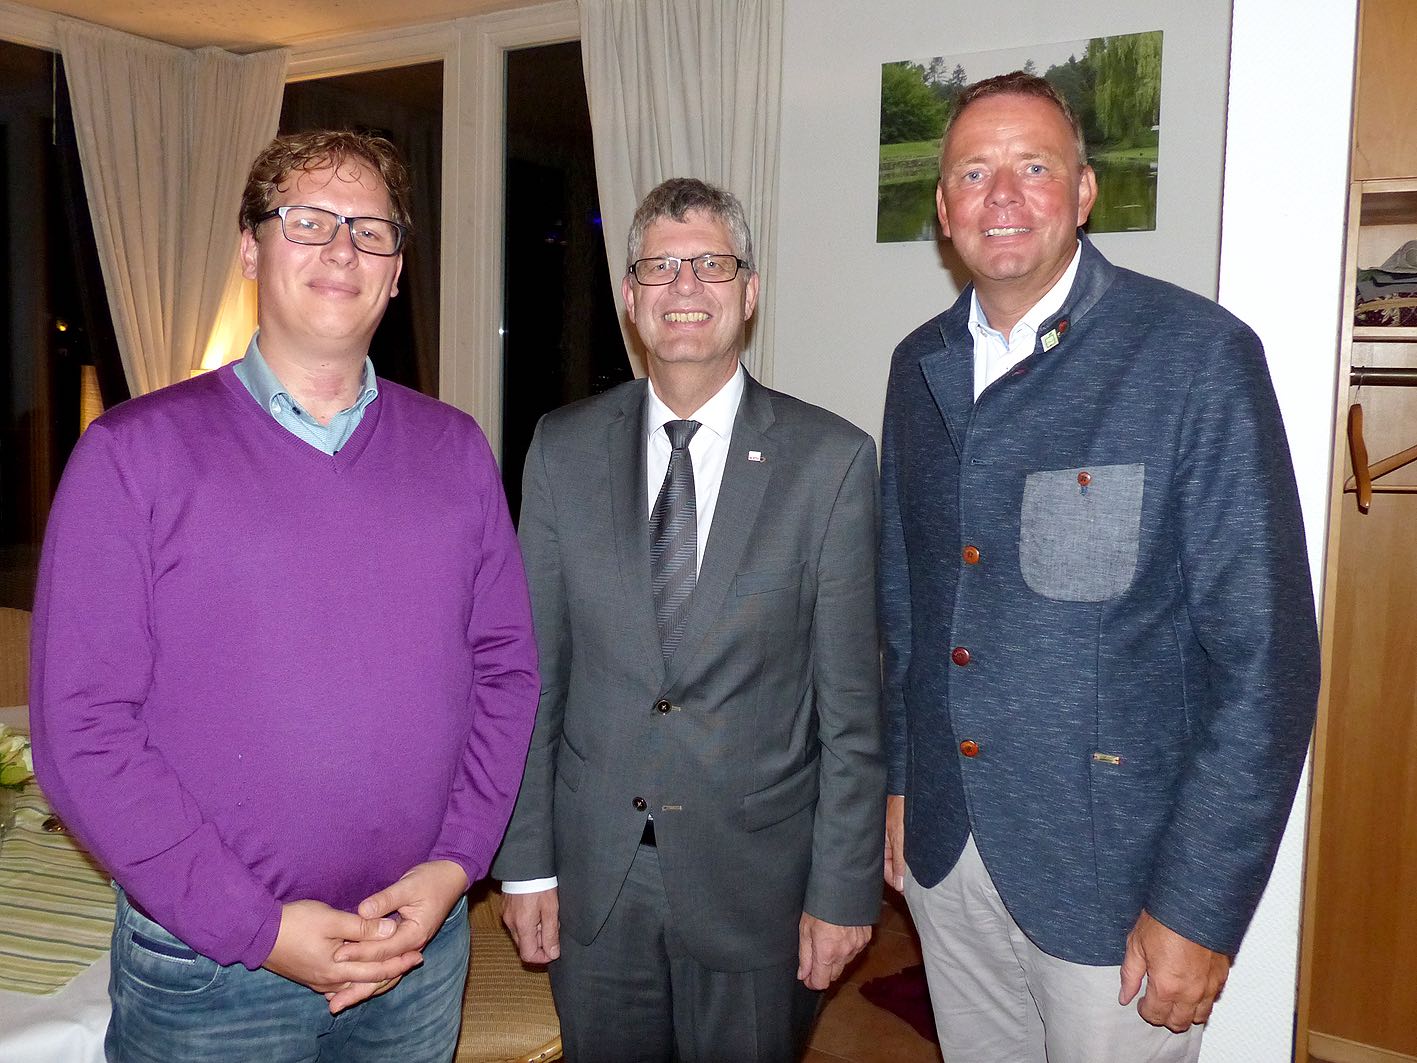 v. l. n. r.: Dr. Christian Tennie, Stadtverband Lügde, Christian Haase MdB und Matthias Goeken MdL